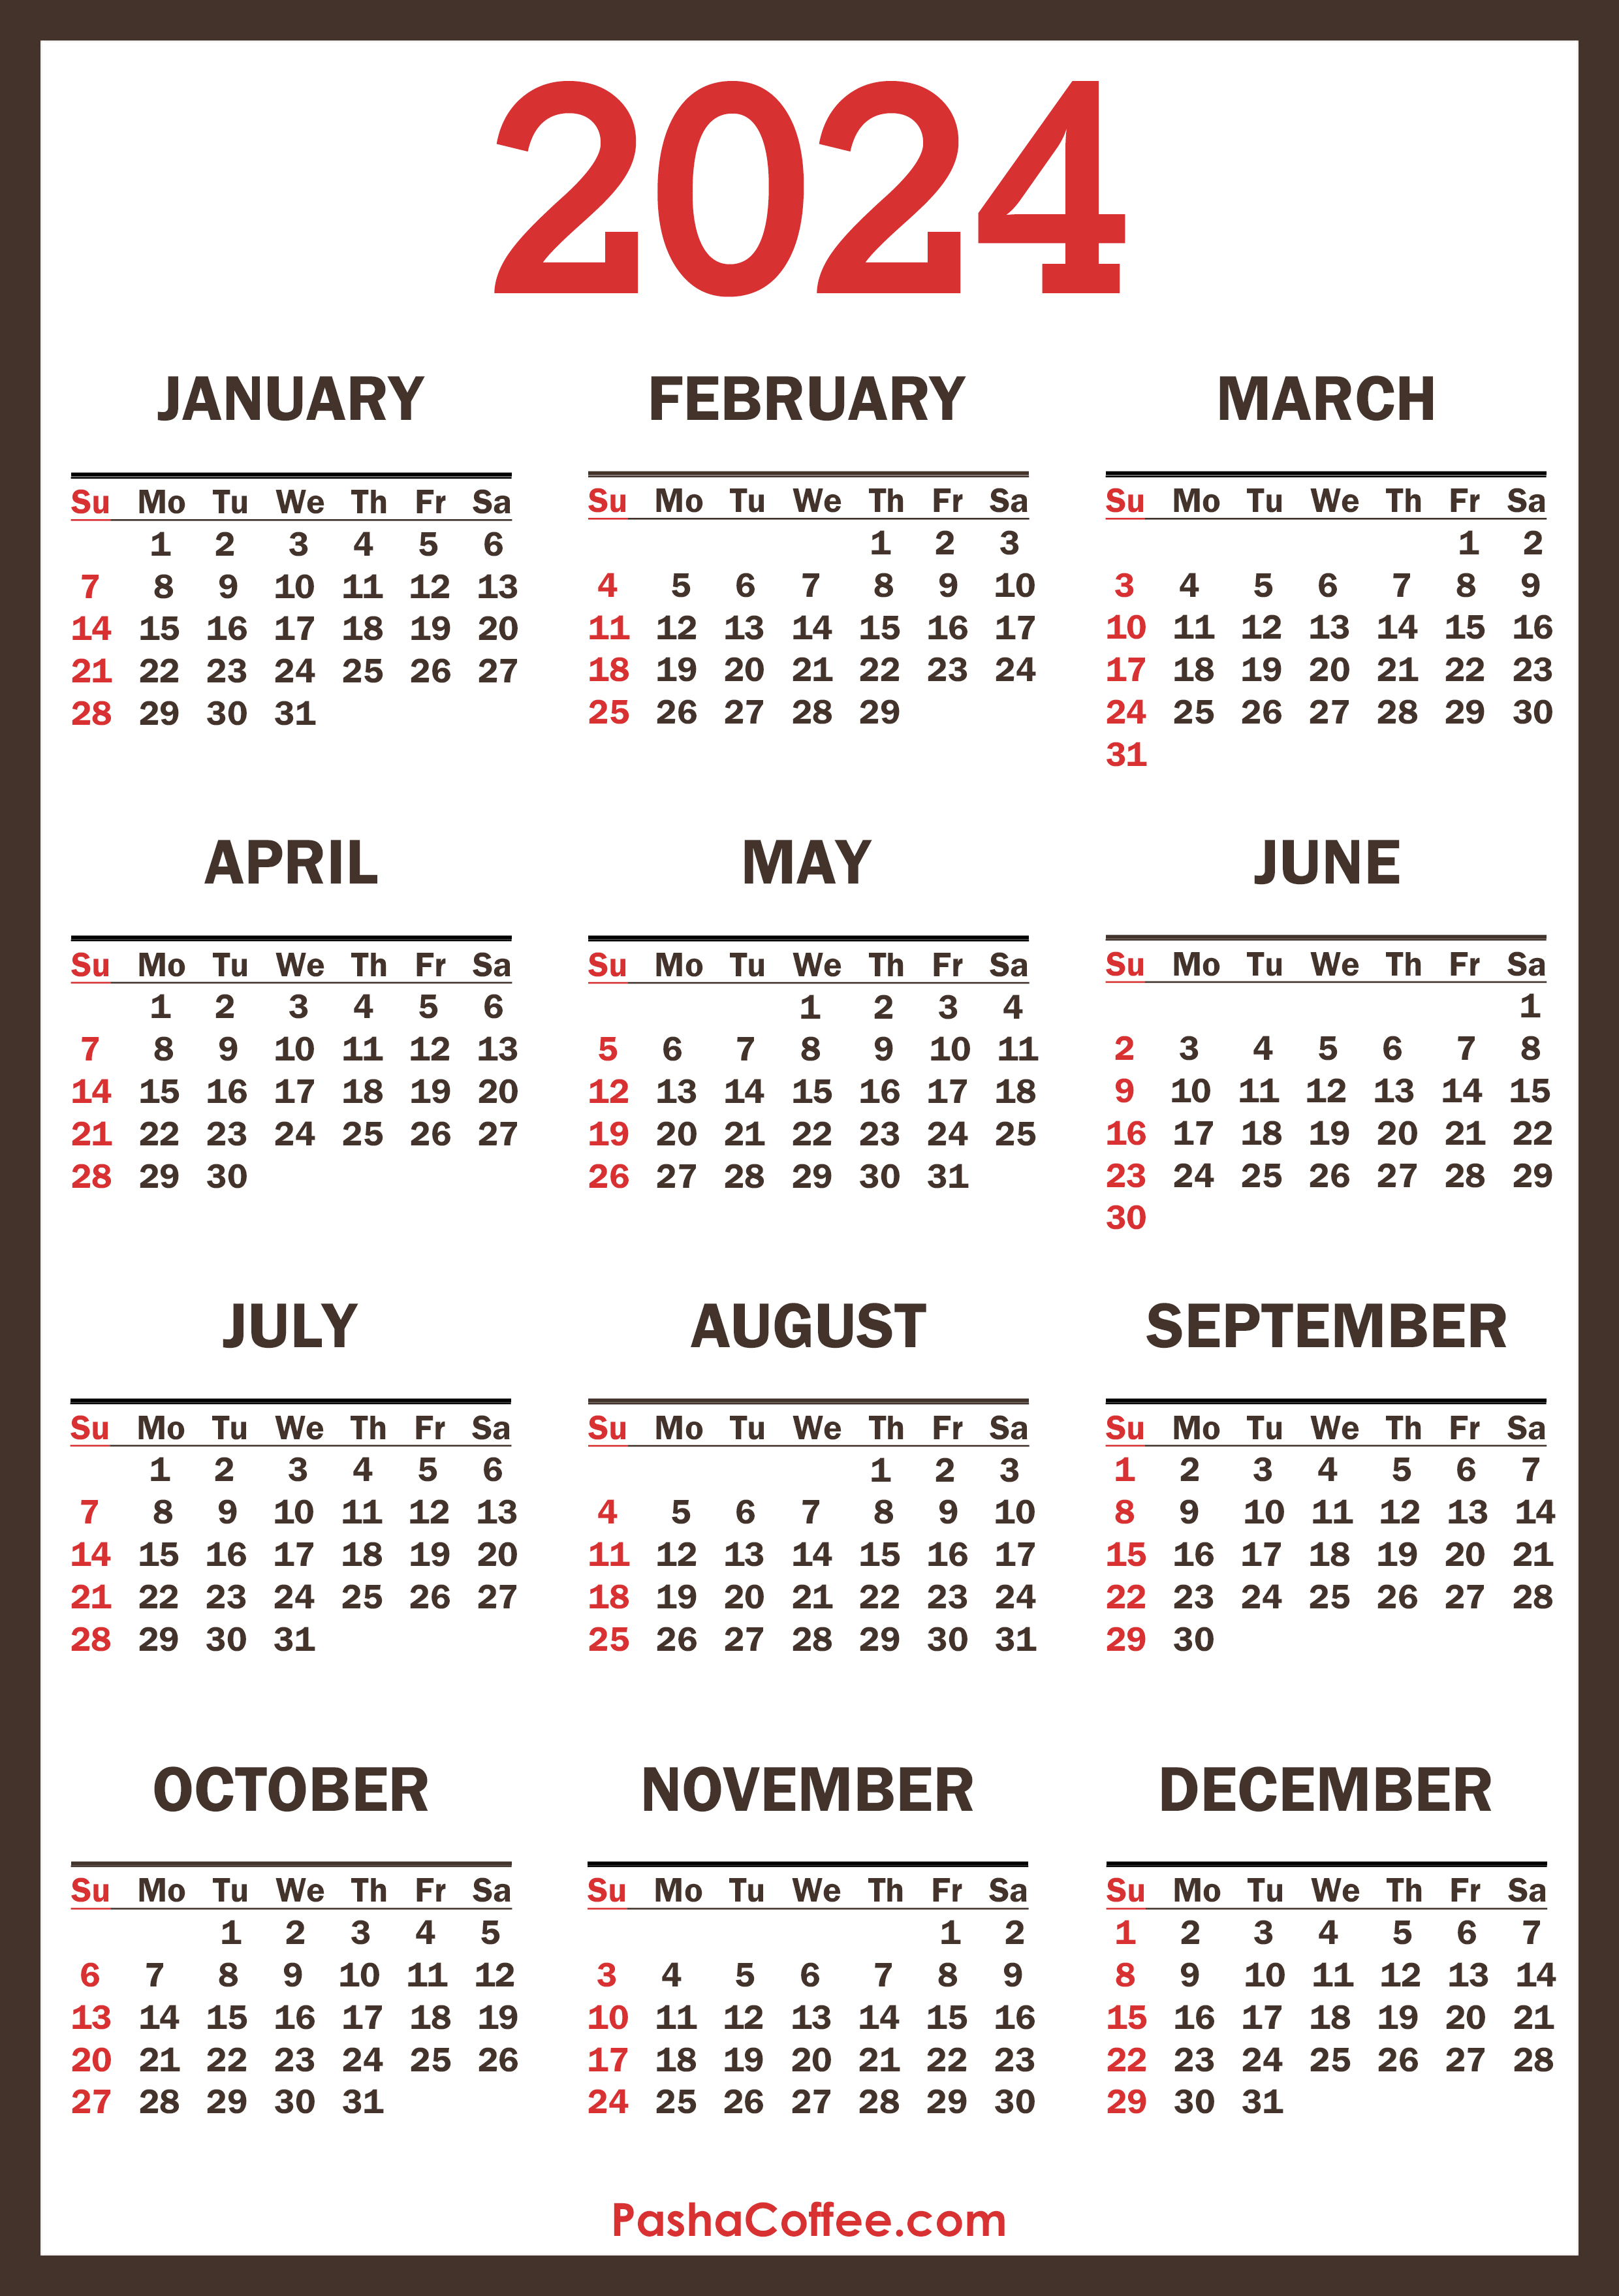 Free Printable May 2024 Calendars - Download